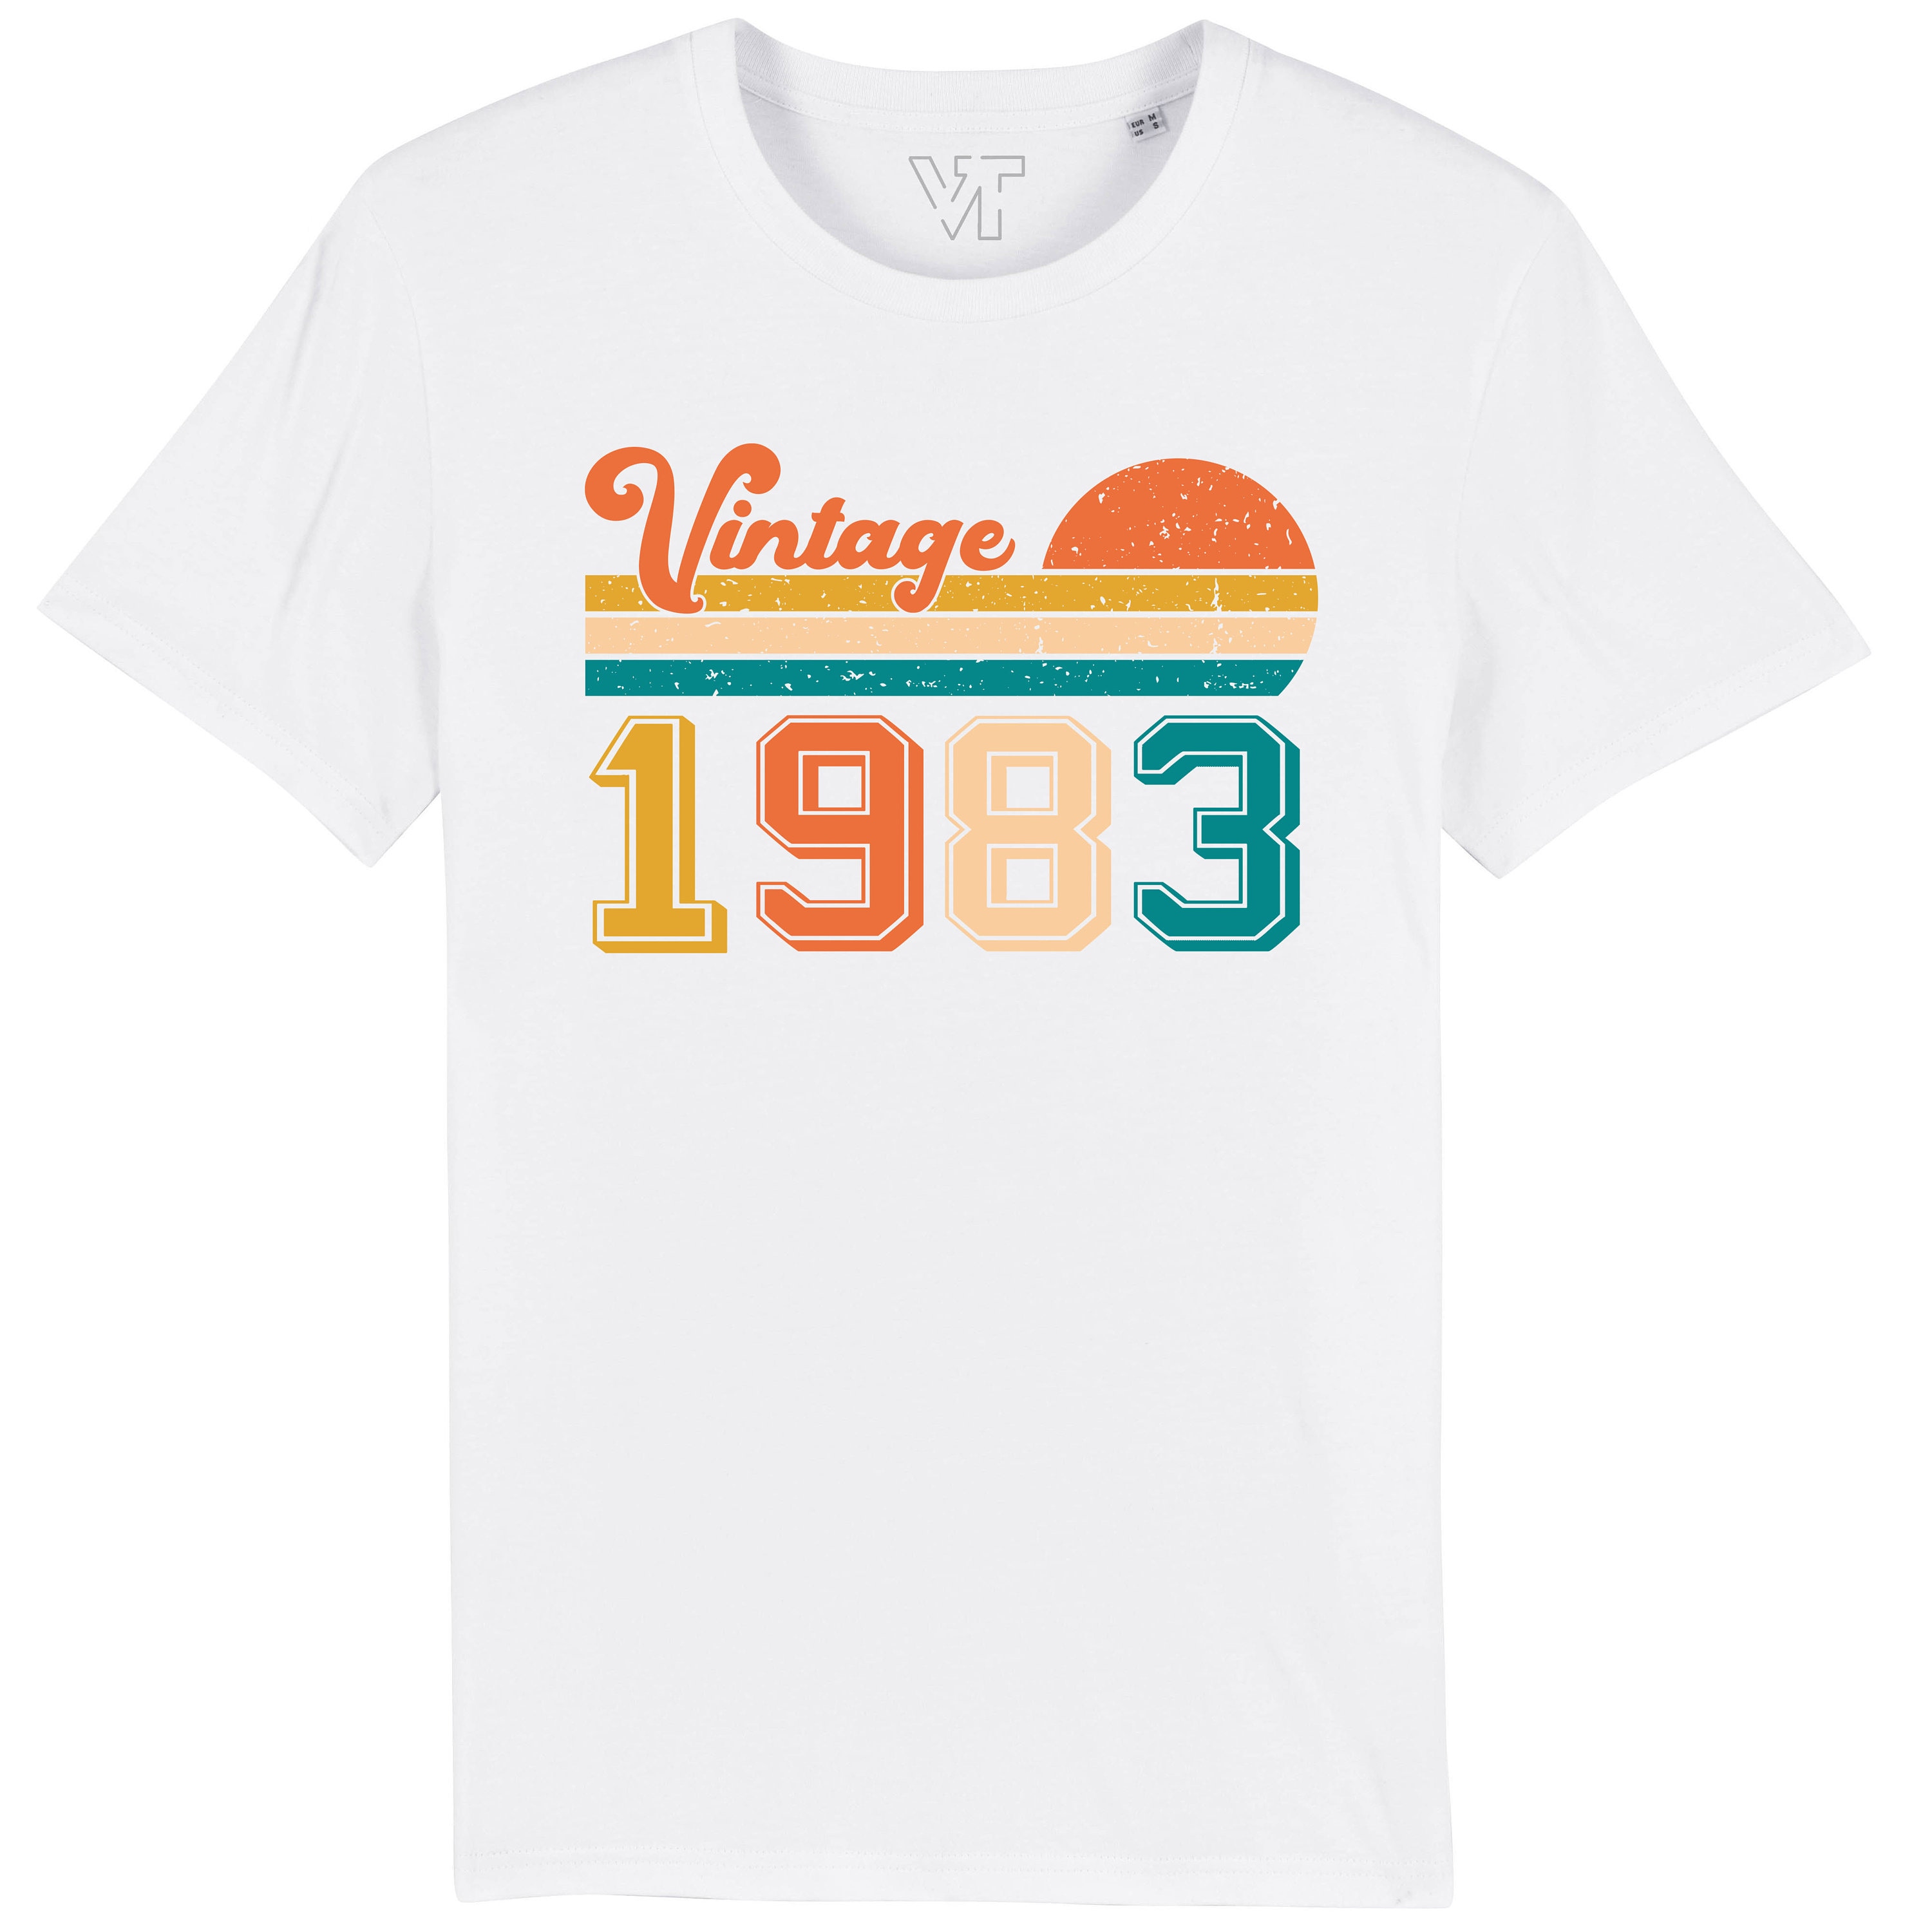 Discover 40th Birthday Shirt Vintage 1983 T Shirt 1983 Birthday Gift 40th Birthday T-Shirt